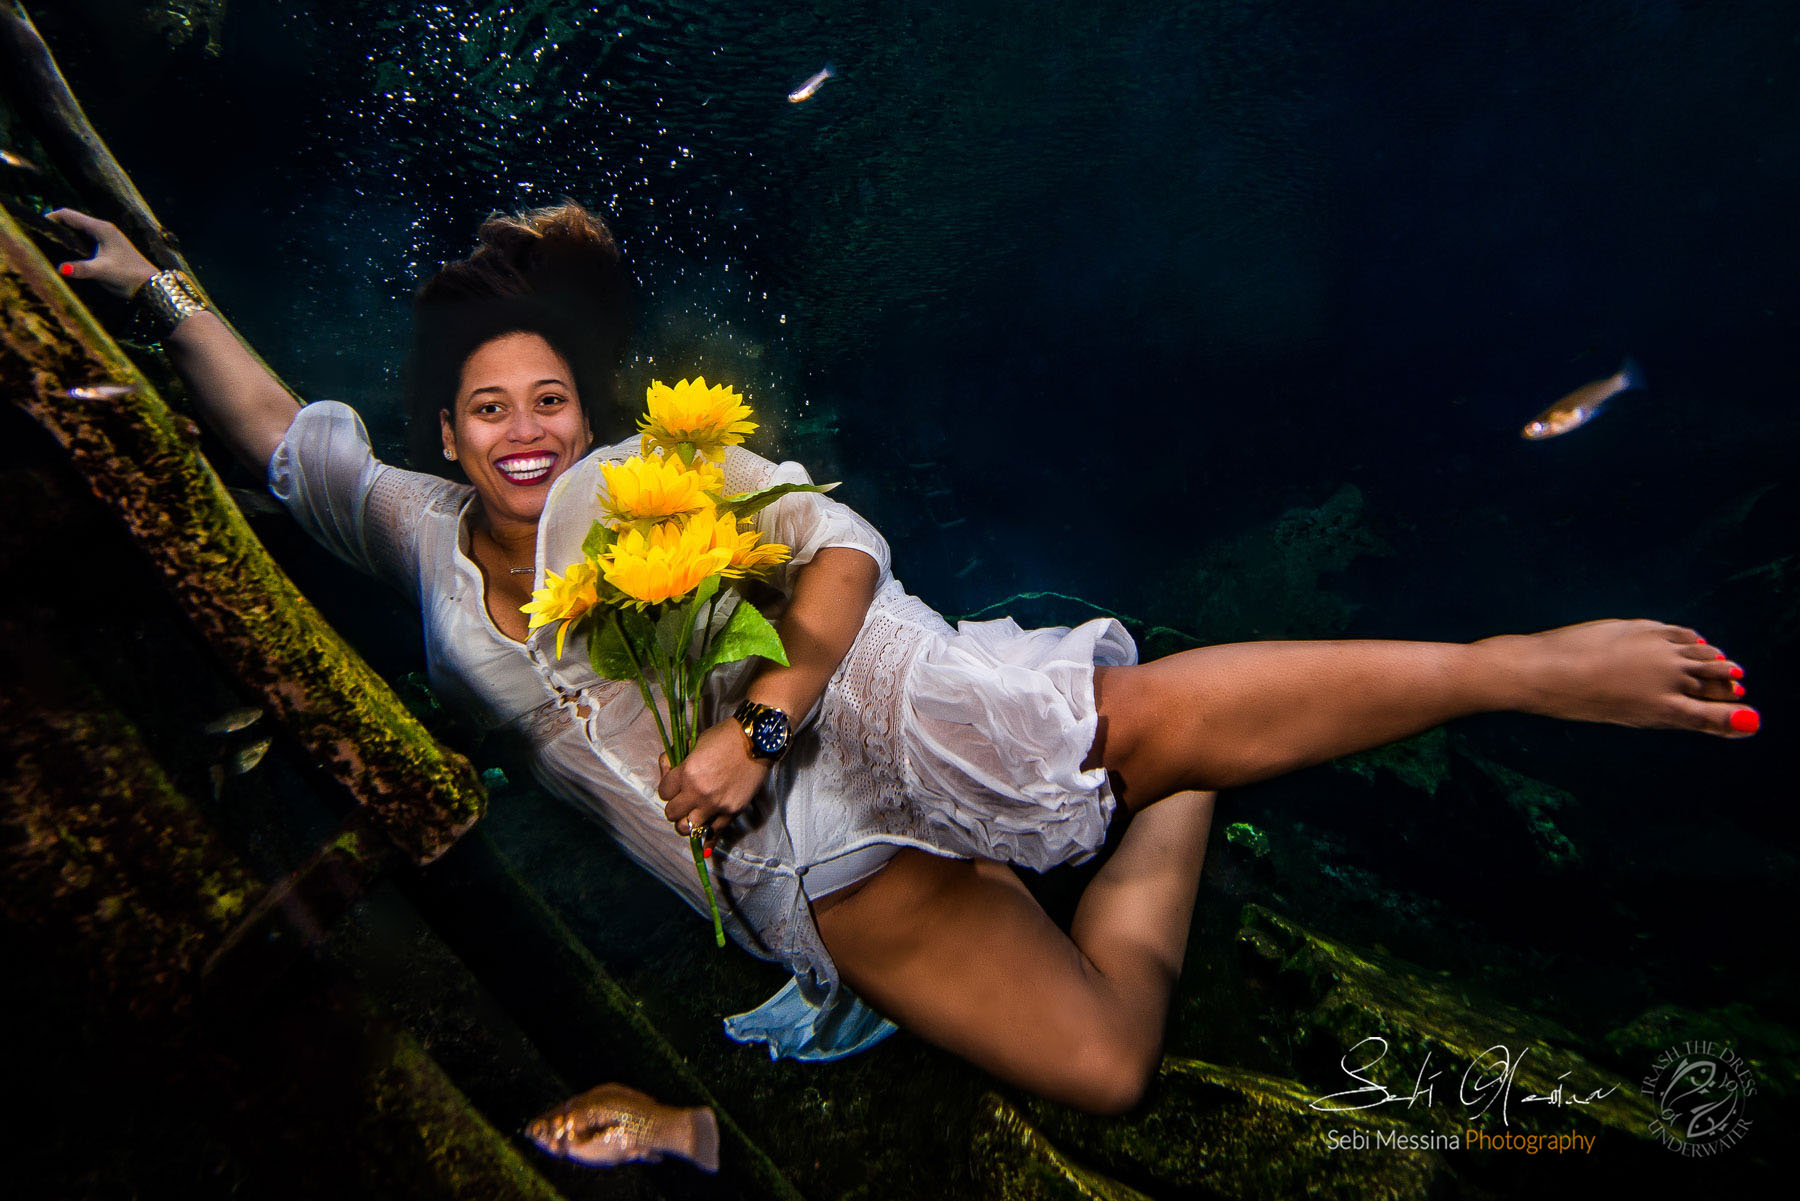 Tulum Underwater Photoshoot – Cenote Underwater Modelling in Mexico – Black woman – Sebi Messina Photography